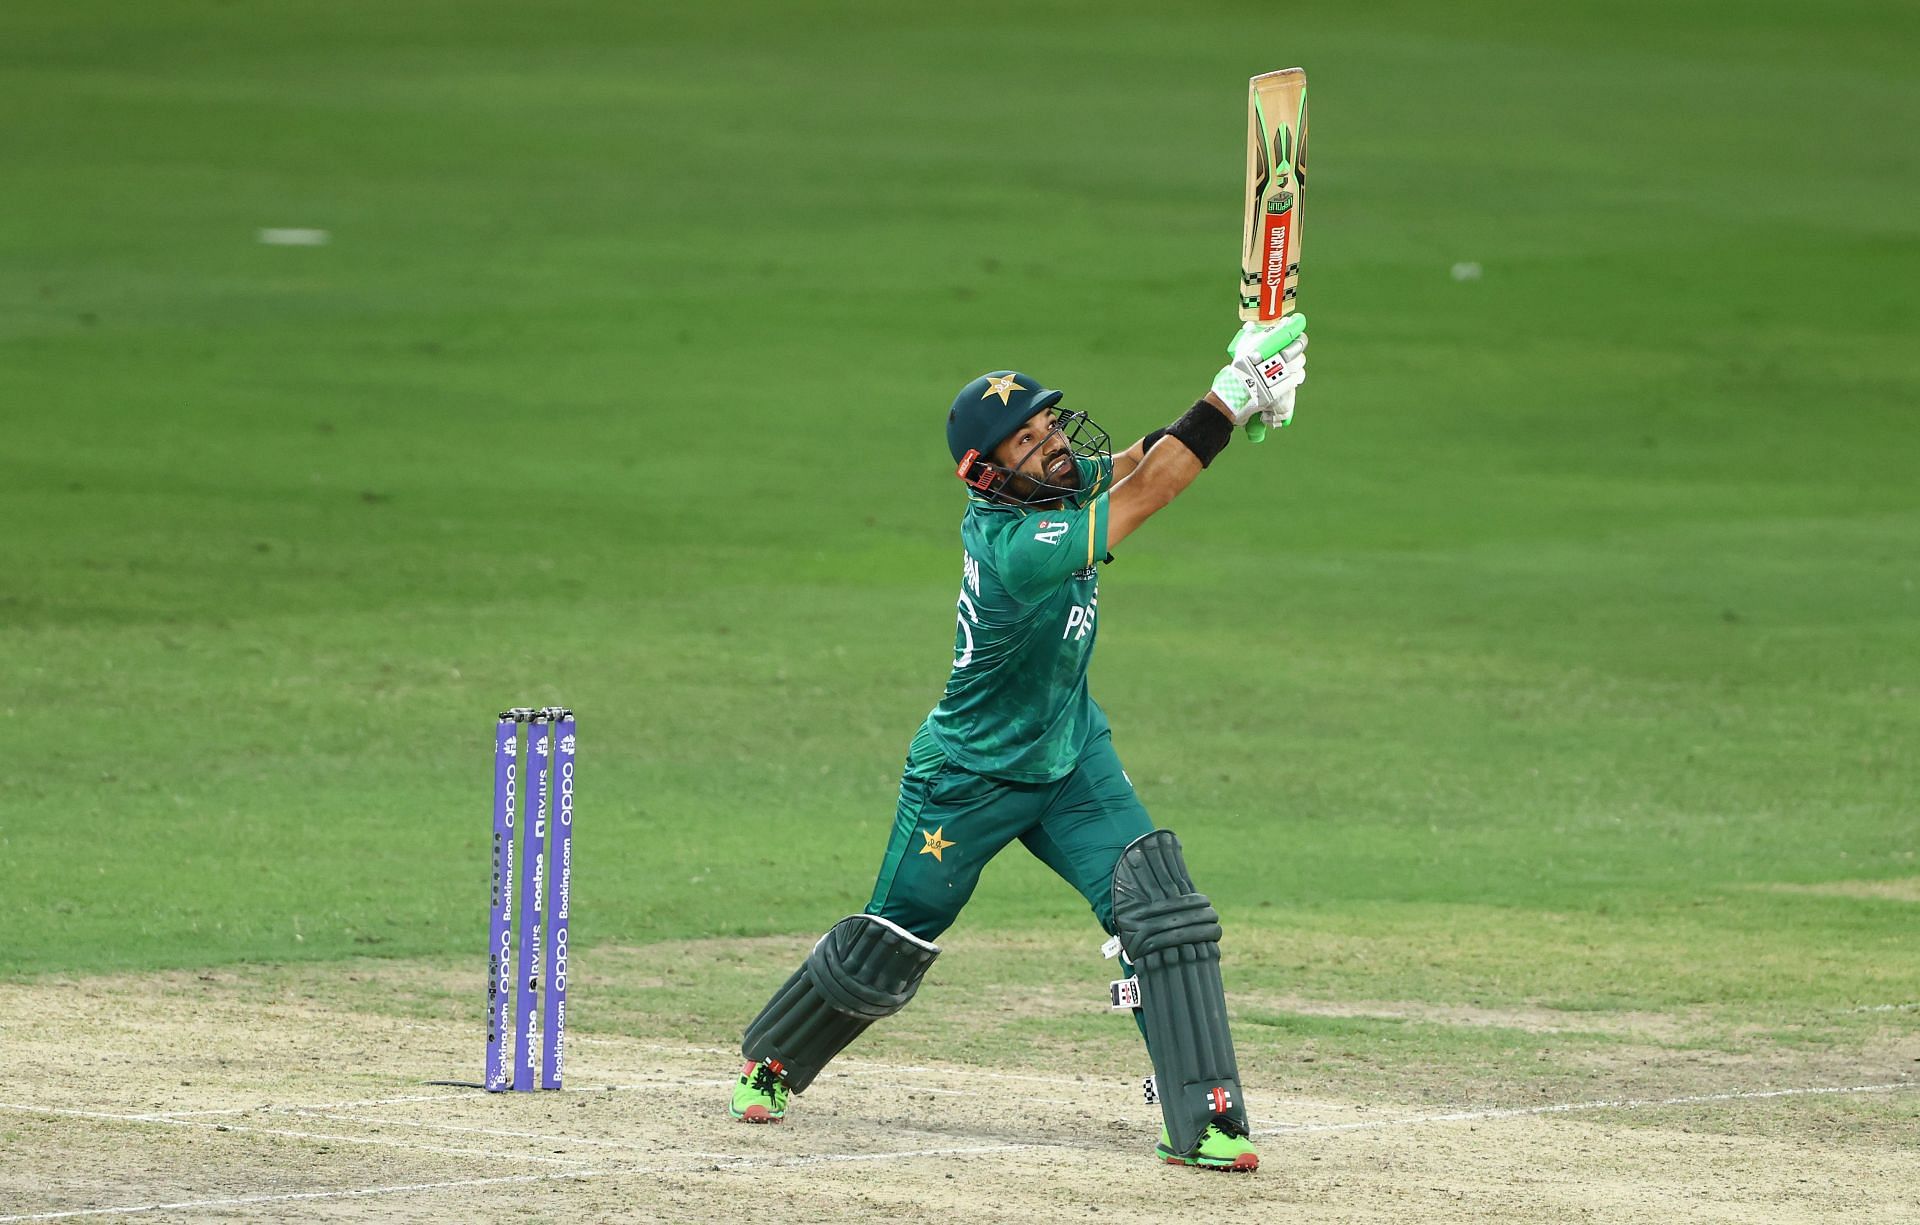 Mohammad Rizwan scored a match-winning fifty for Pakistan today (Image: Getty)